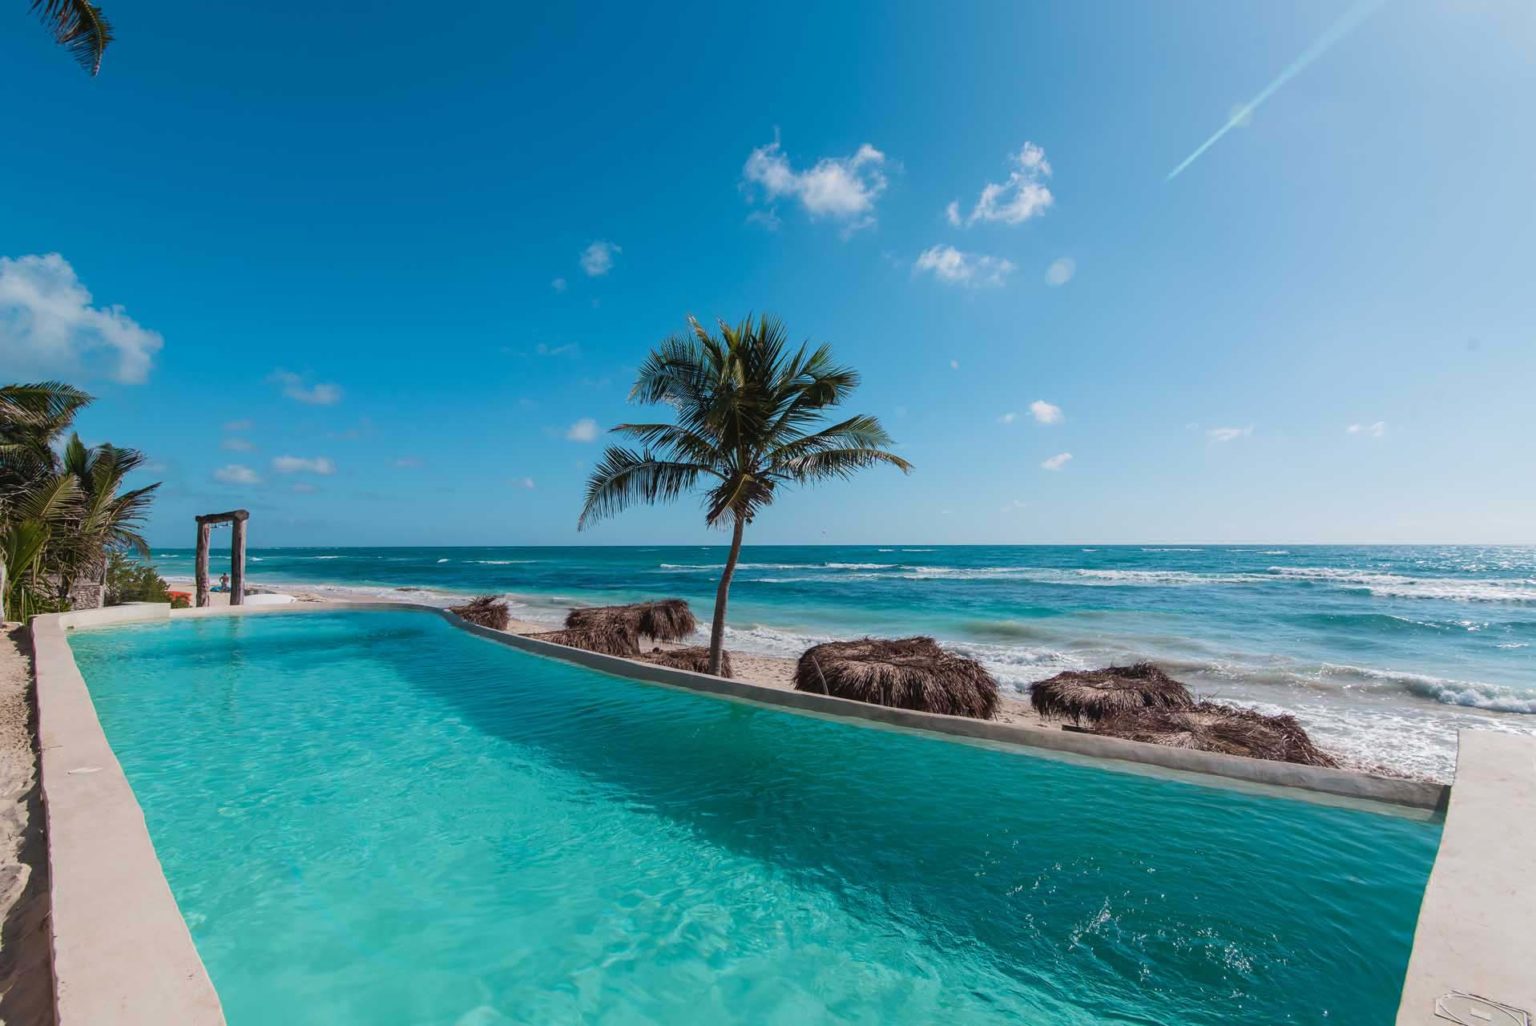 Infinity pool overlooking the beach at the Papaya Playa Project